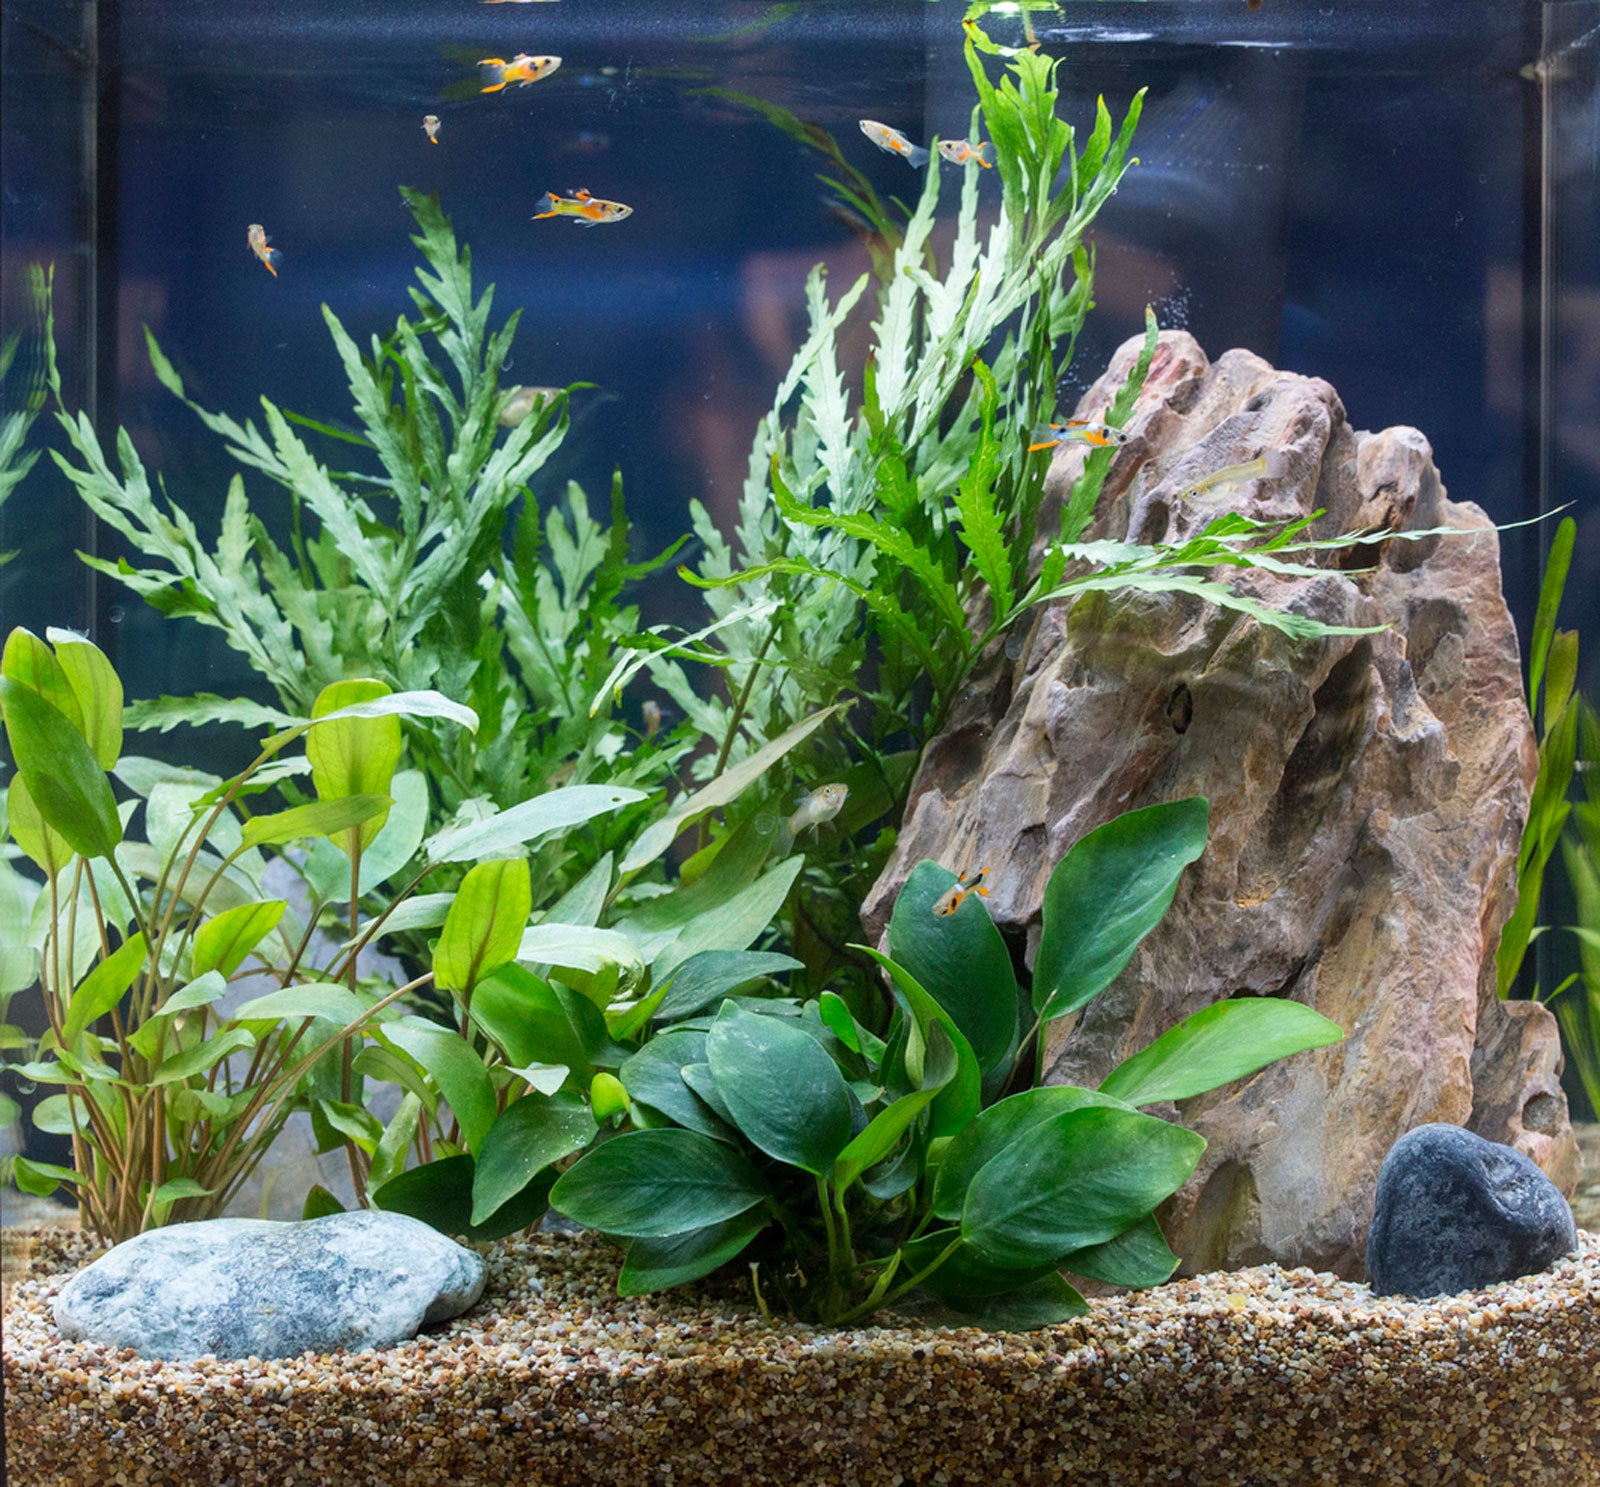 Aquarium Seeds Water Grass Live Plant Fish Tank Decoration